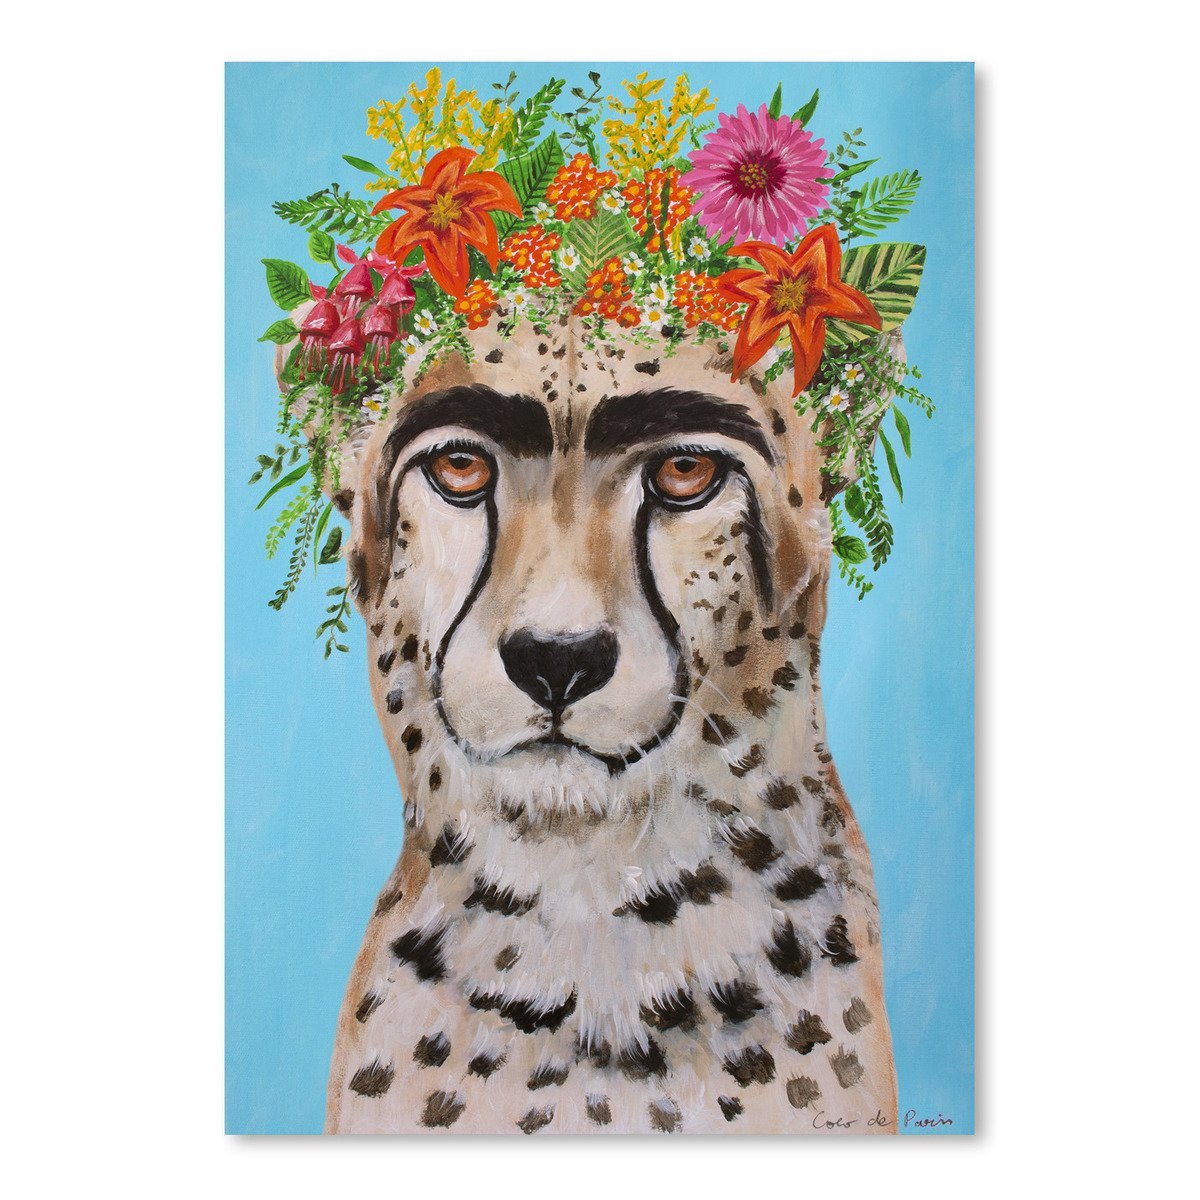 Cheetah by Coco de Paris - Art Print - Americanflat